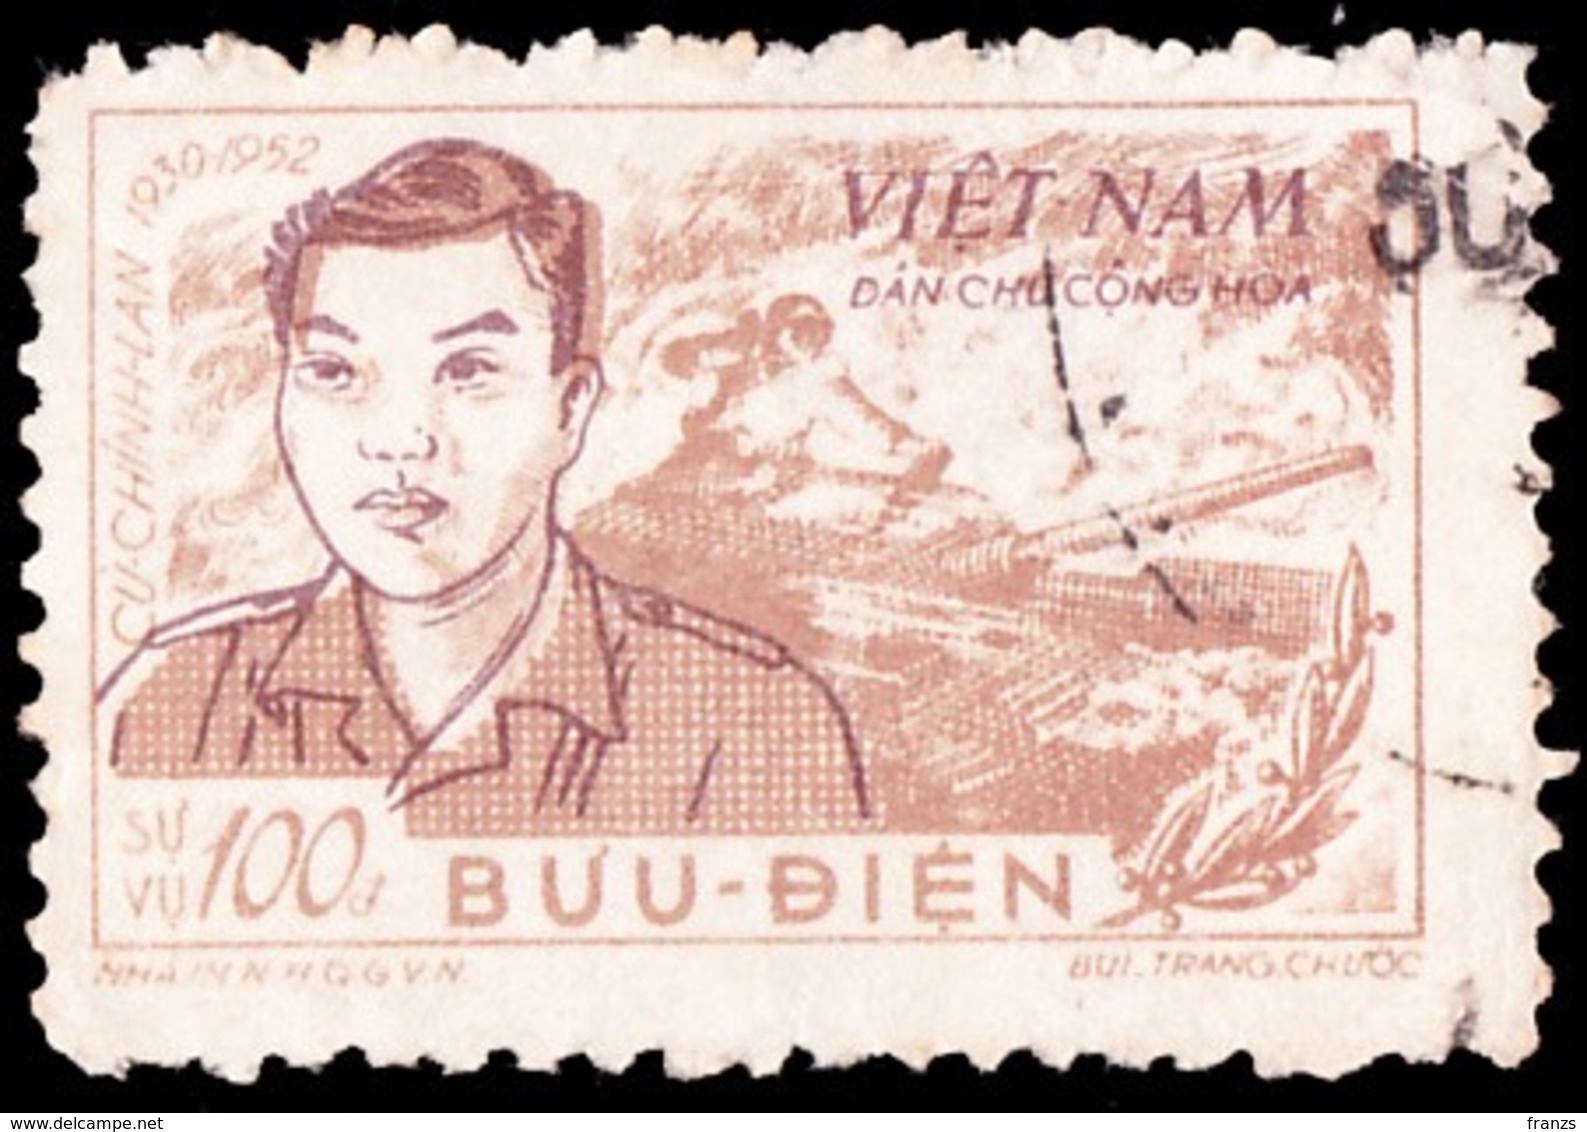 Vietnam Official 1956 Michel # 12, Cancel NH, - Vietnam